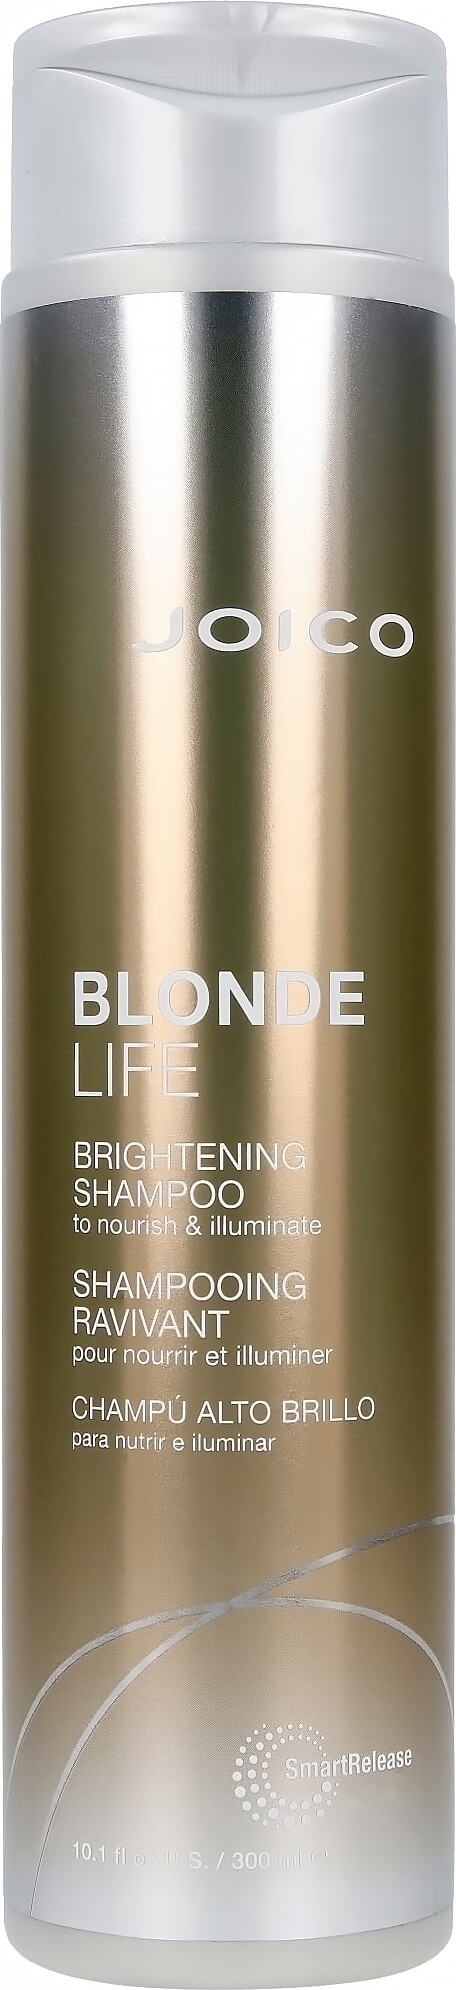 Se Joico - Blonde Life Brightening Shampoo 300 Ml hos Gucca.dk